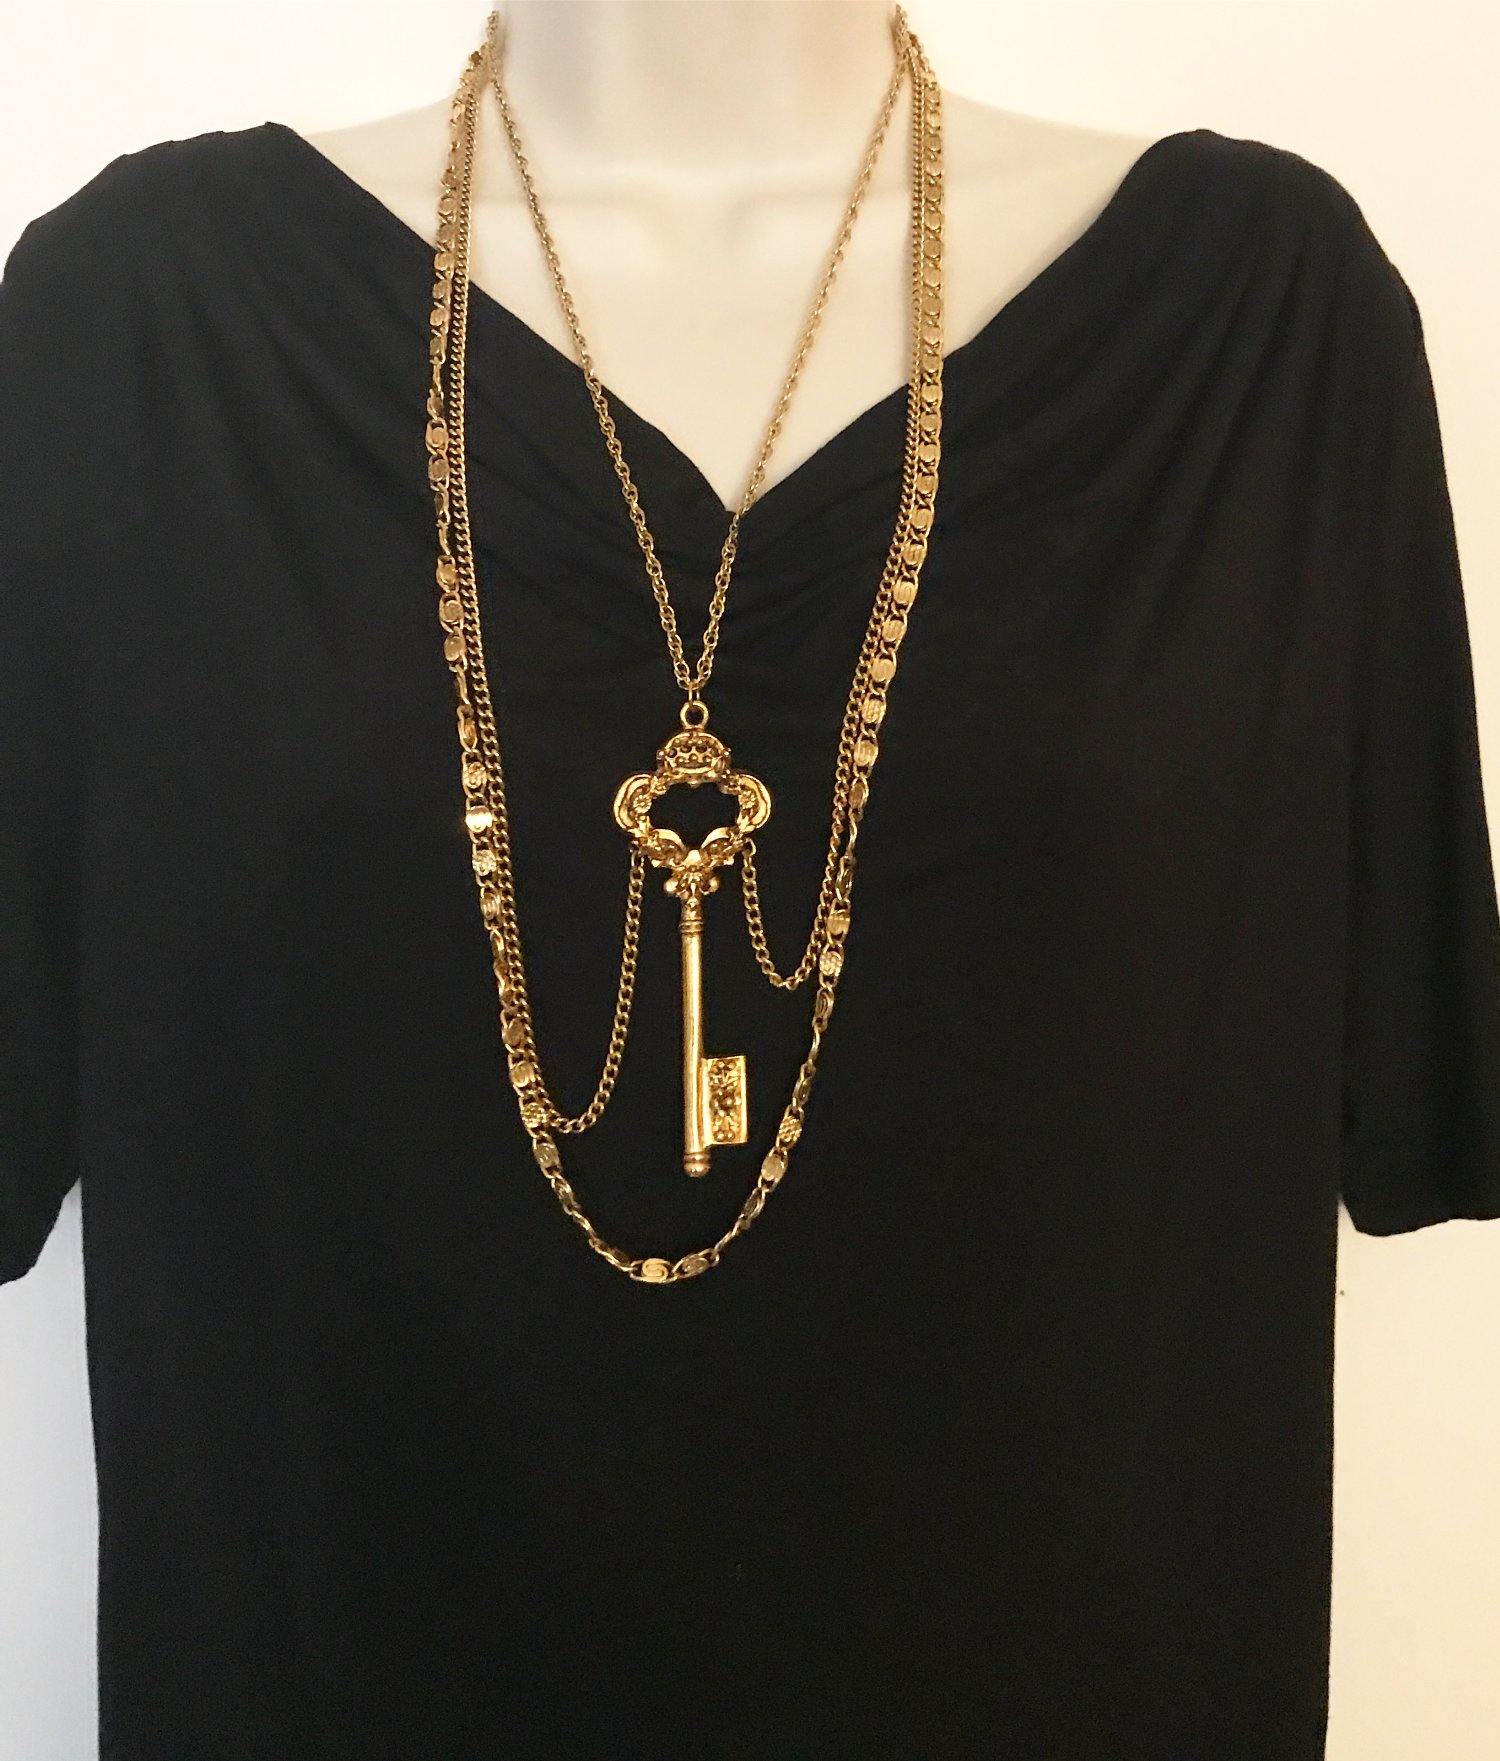 Remarkable Draped Key Vintage Necklace - Lamoree’s Vintage